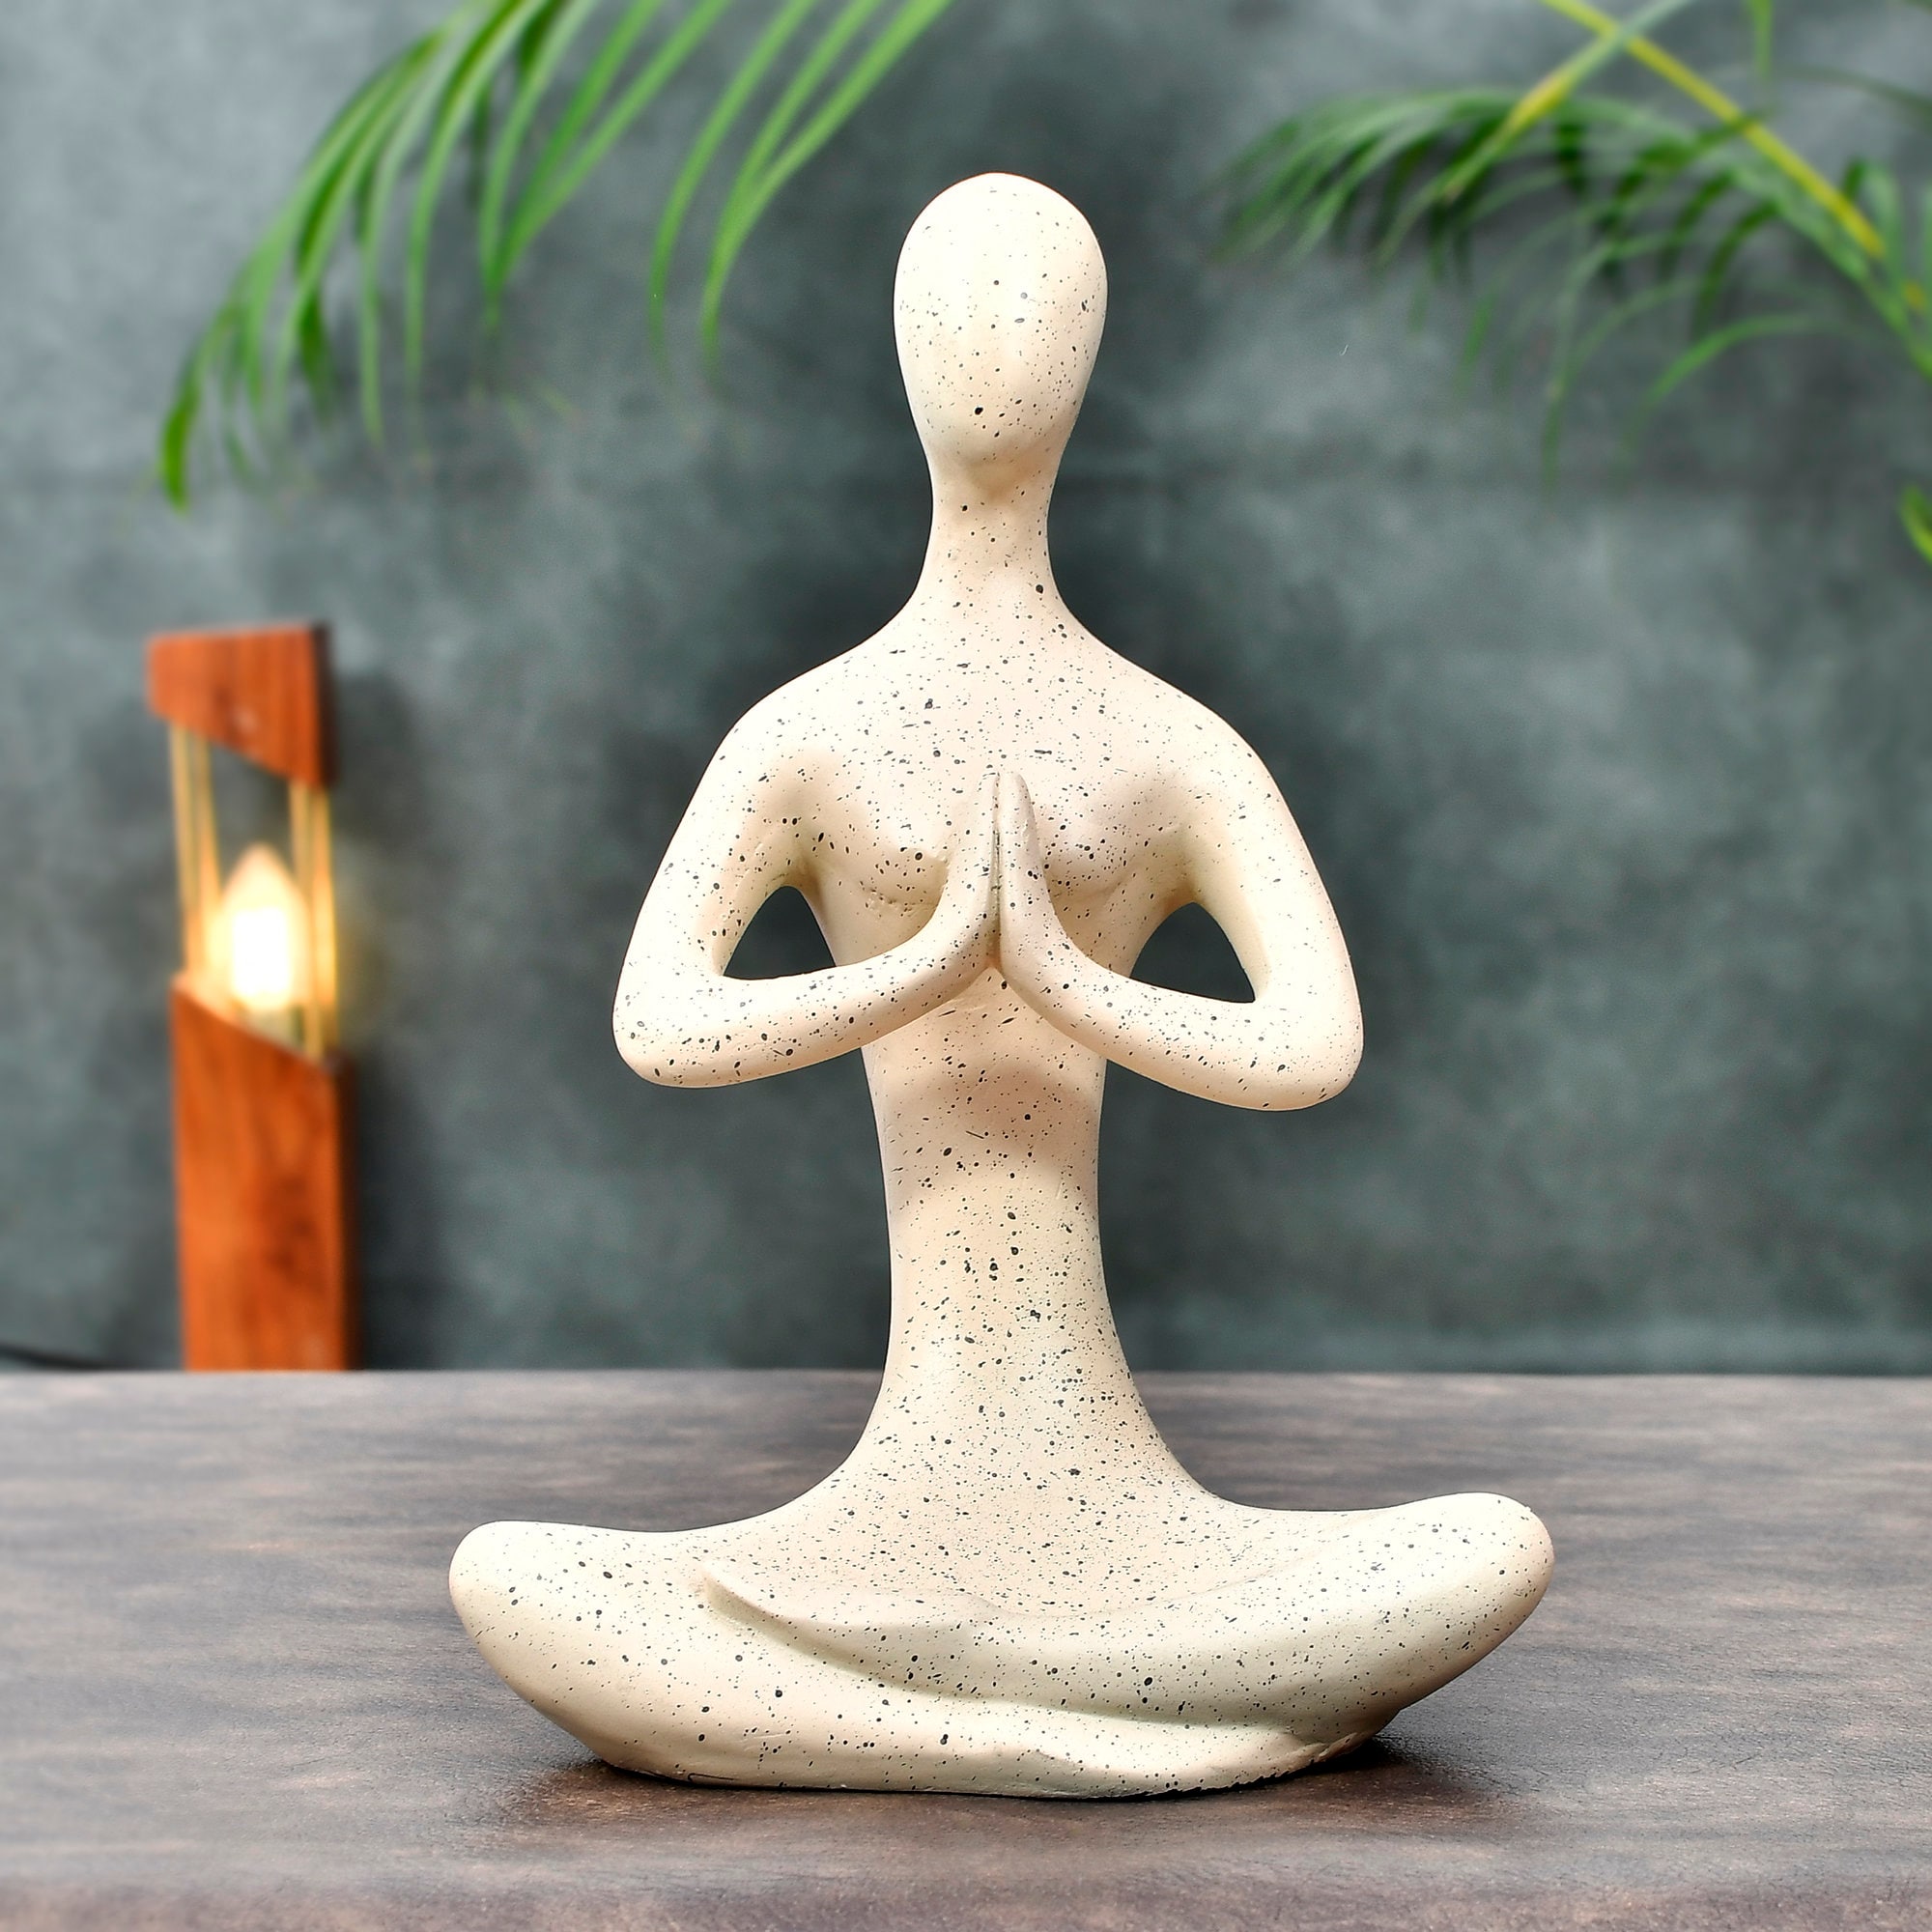 Buy Yoga Figurine Online In India -  India